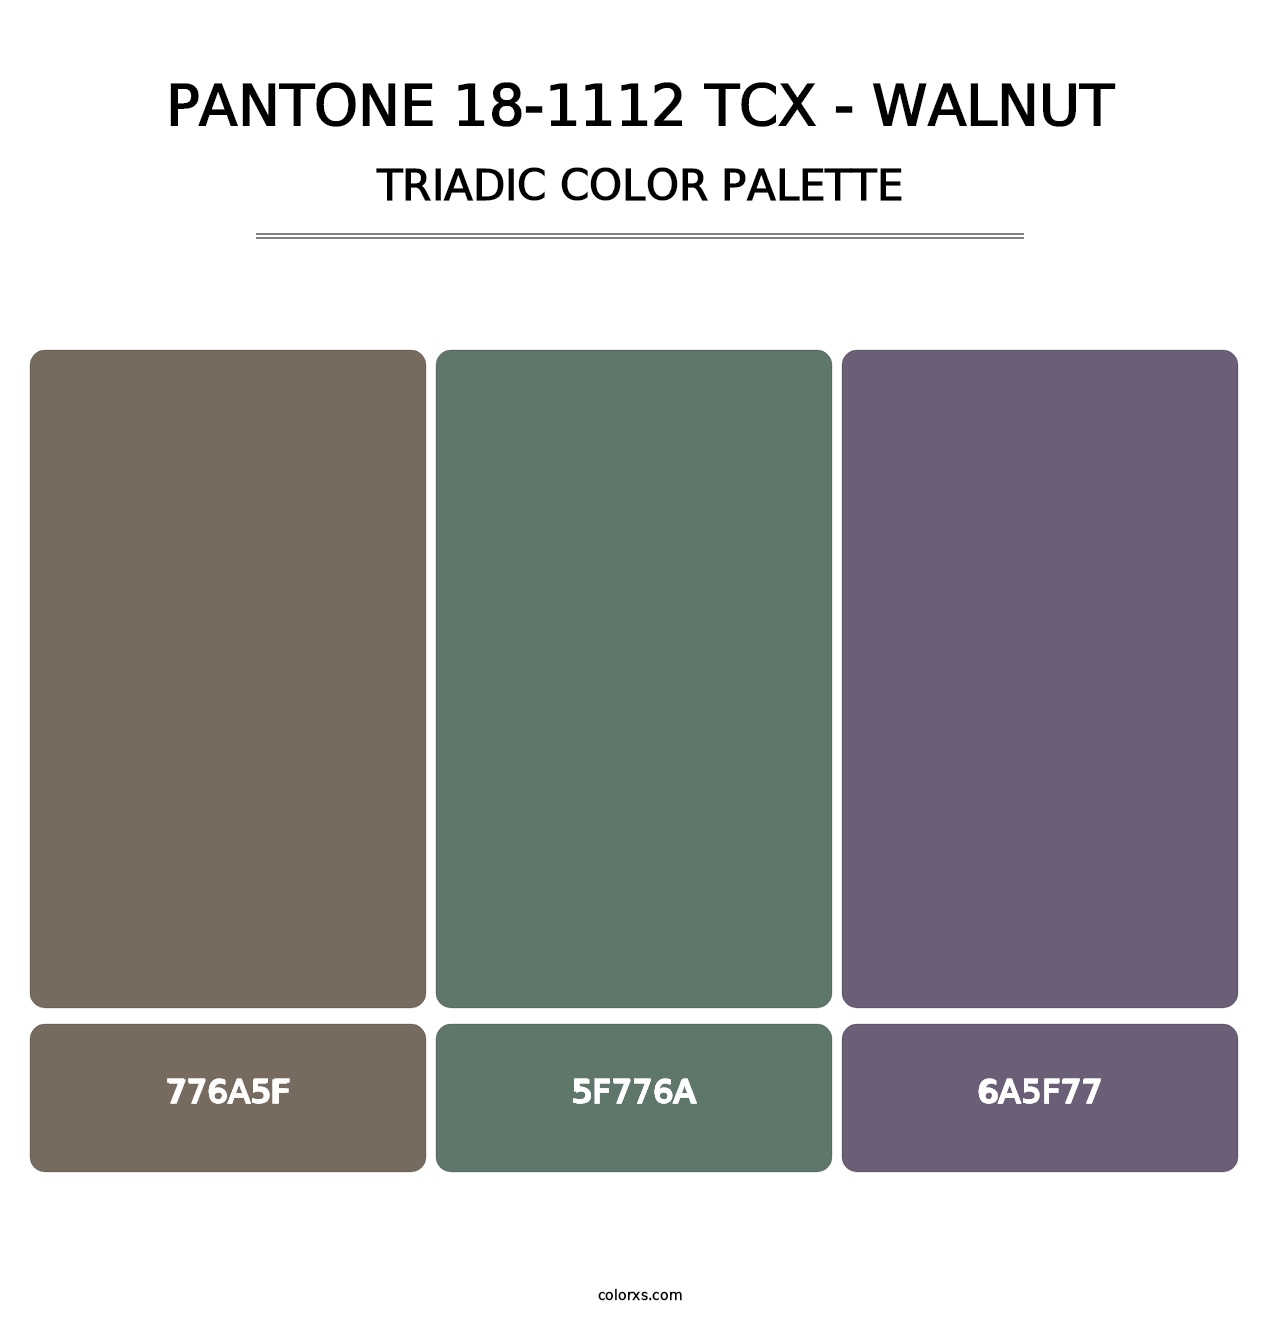 PANTONE 18-1112 TCX - Walnut - Triadic Color Palette